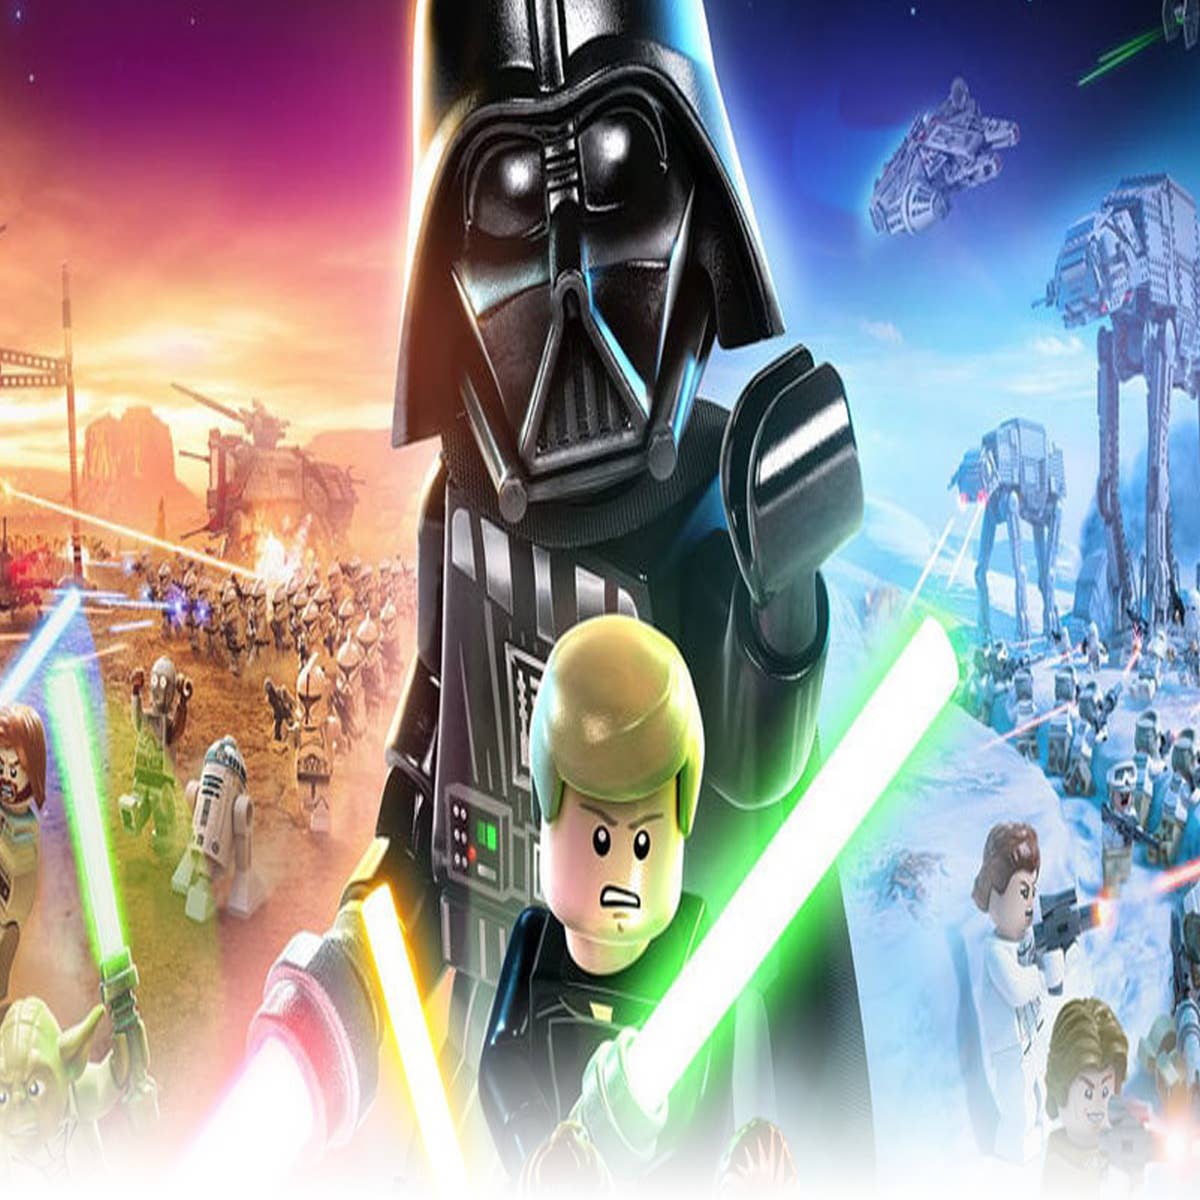 Lego Star Wars: The Skywalker Saga: Game Review